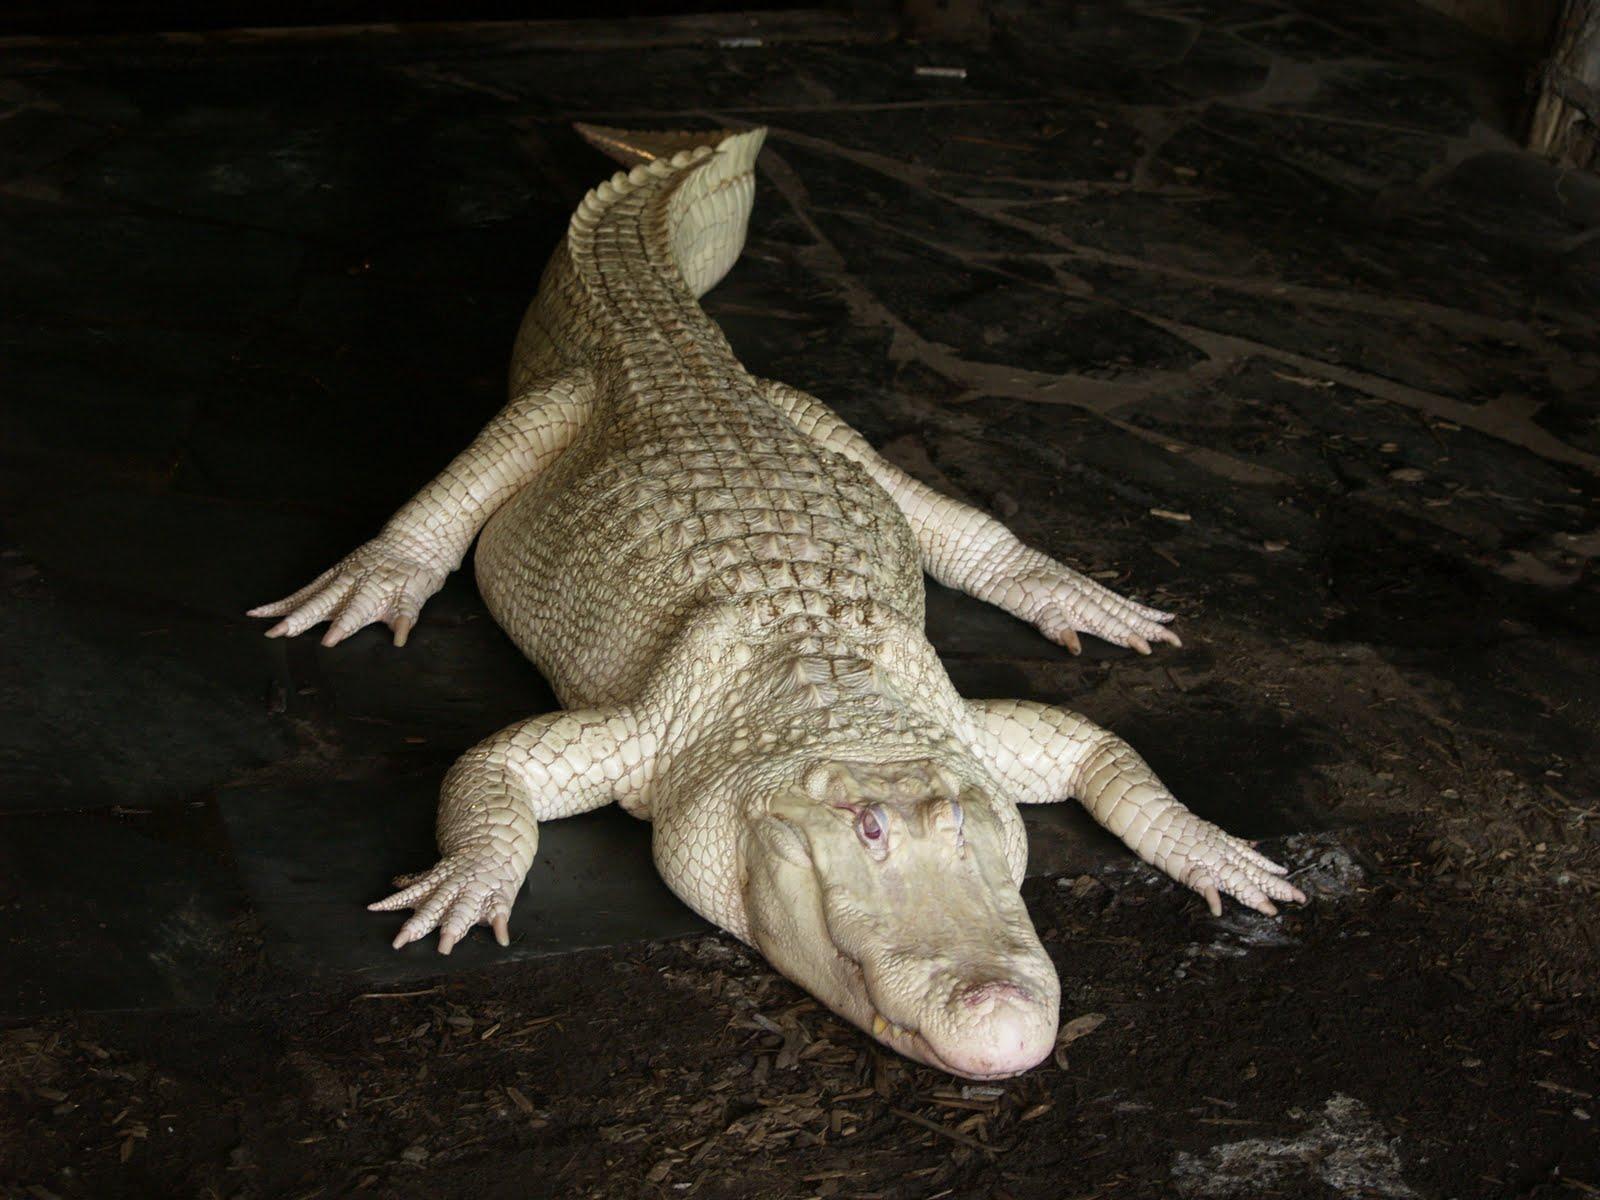 Little Web Treasures: The American Alligator